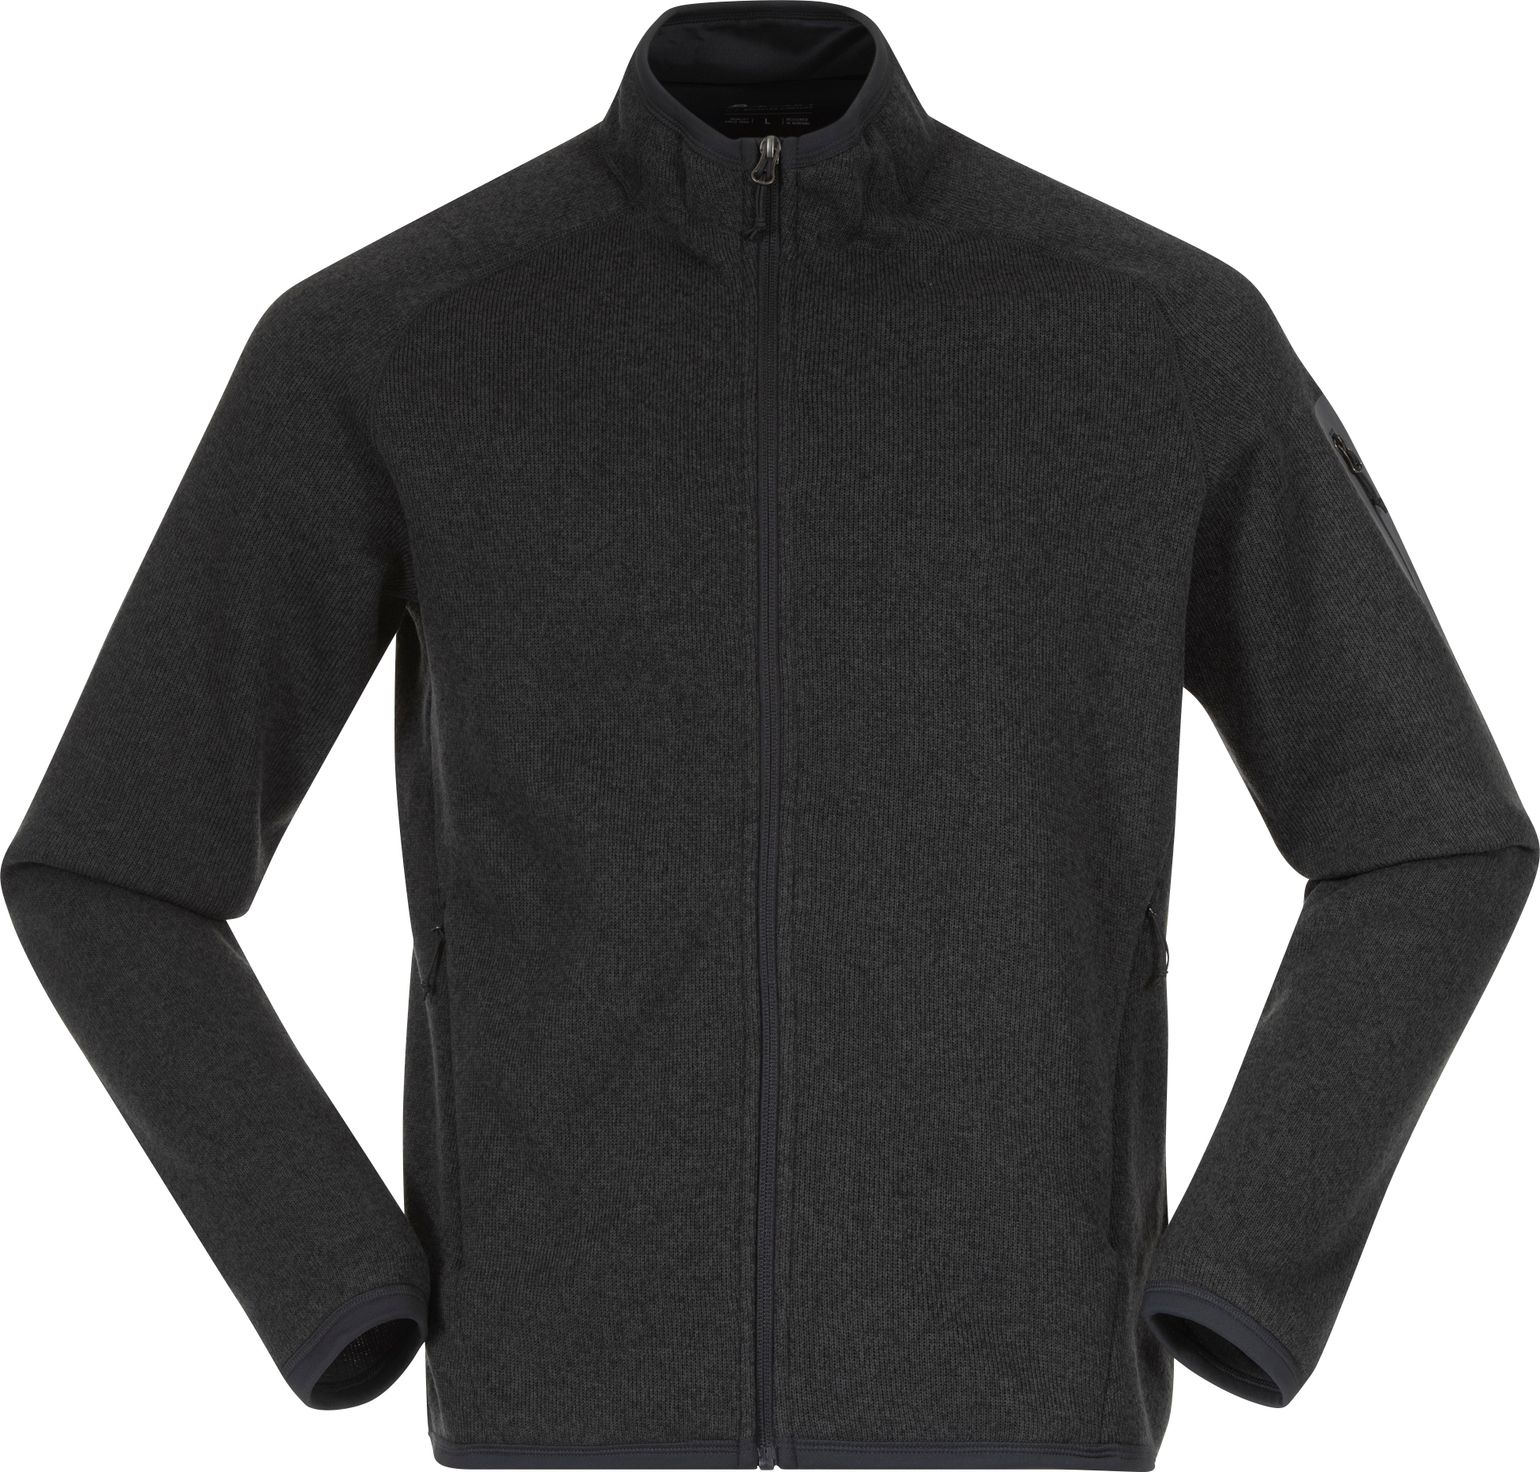 Men's Kamphaug Knitted Jacket Dark Shadow Grey